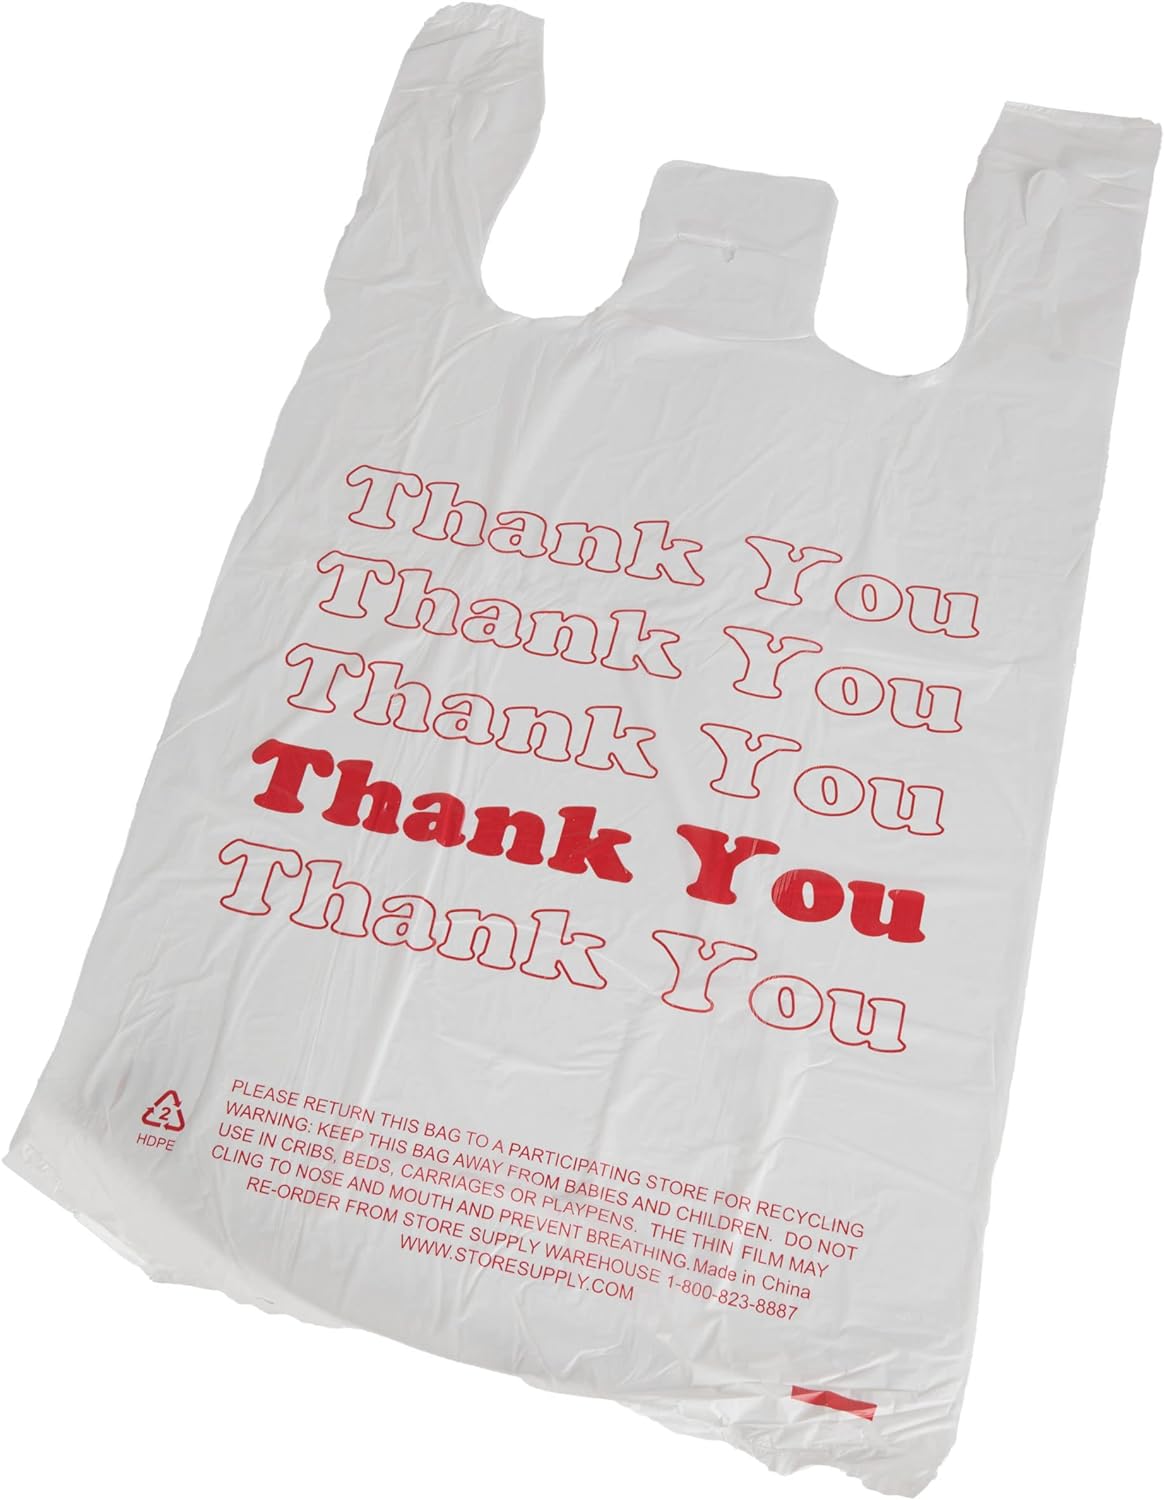 THANK-YOU T-SHIRT PLASTIC BAG